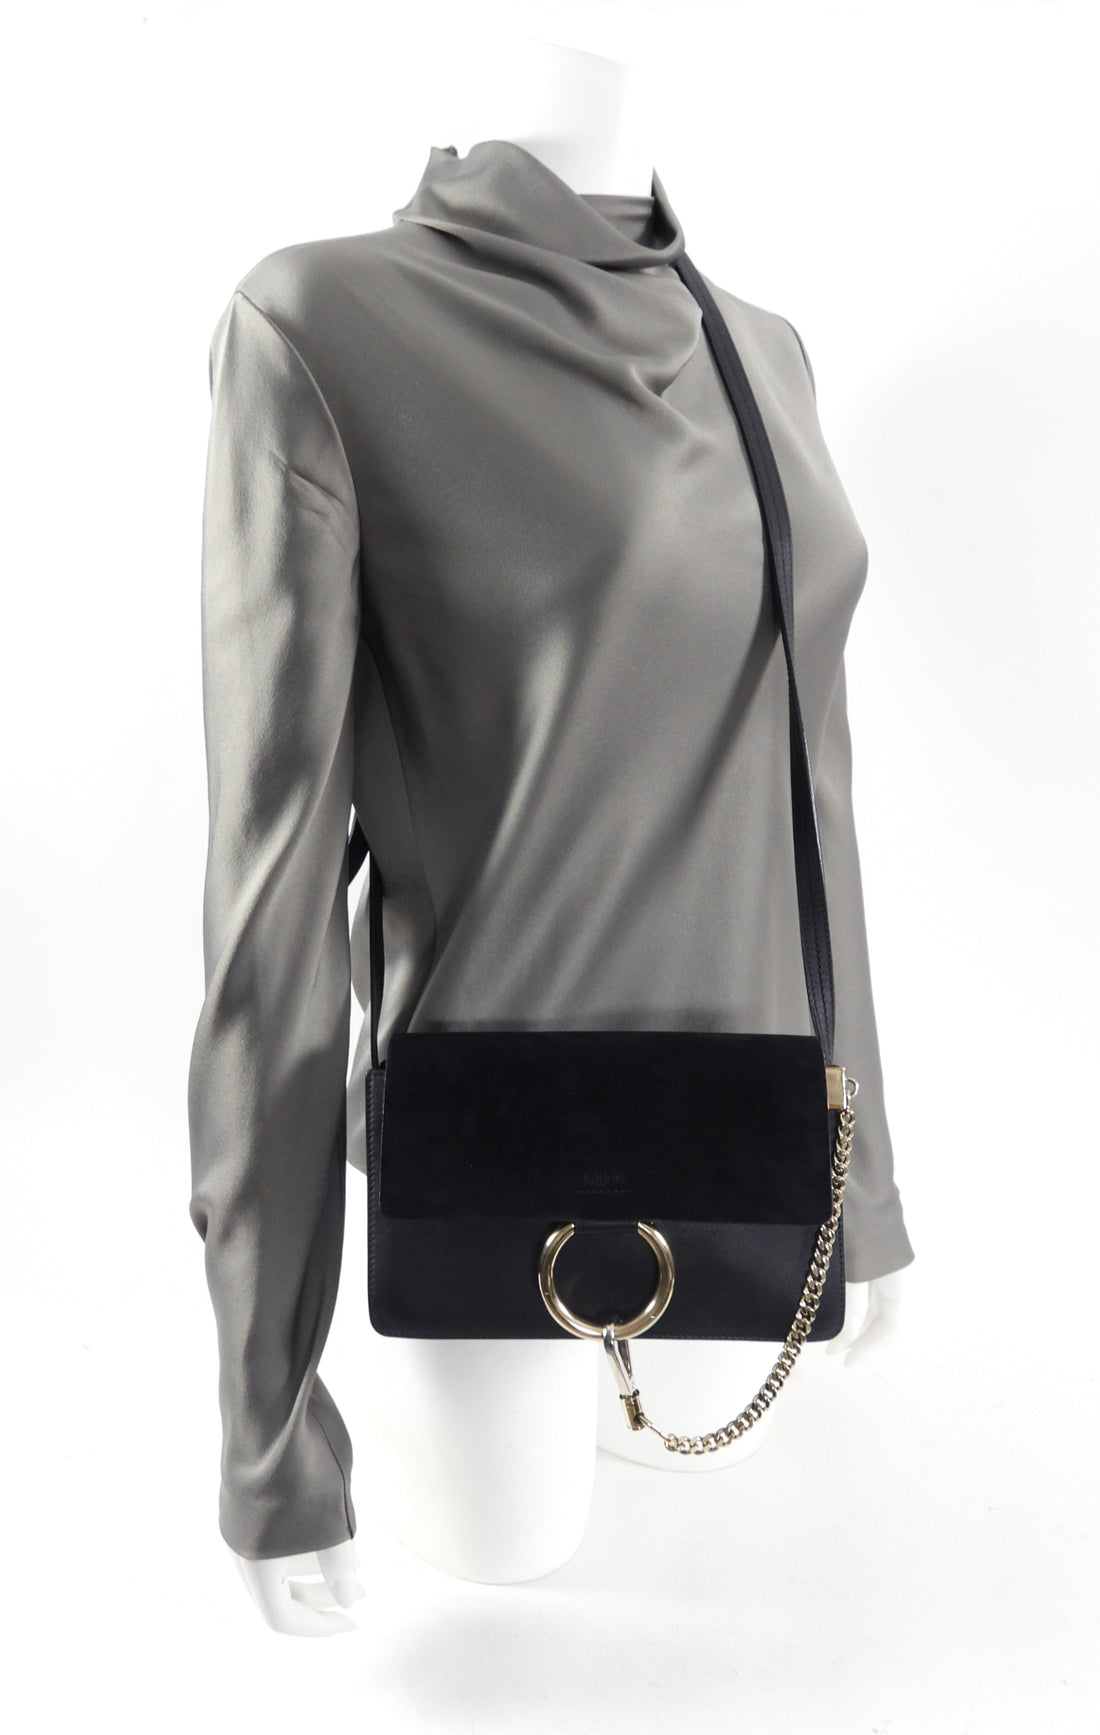 Chloe Faye Crossbody Bag Mini Black in Calfskin Leather - GB